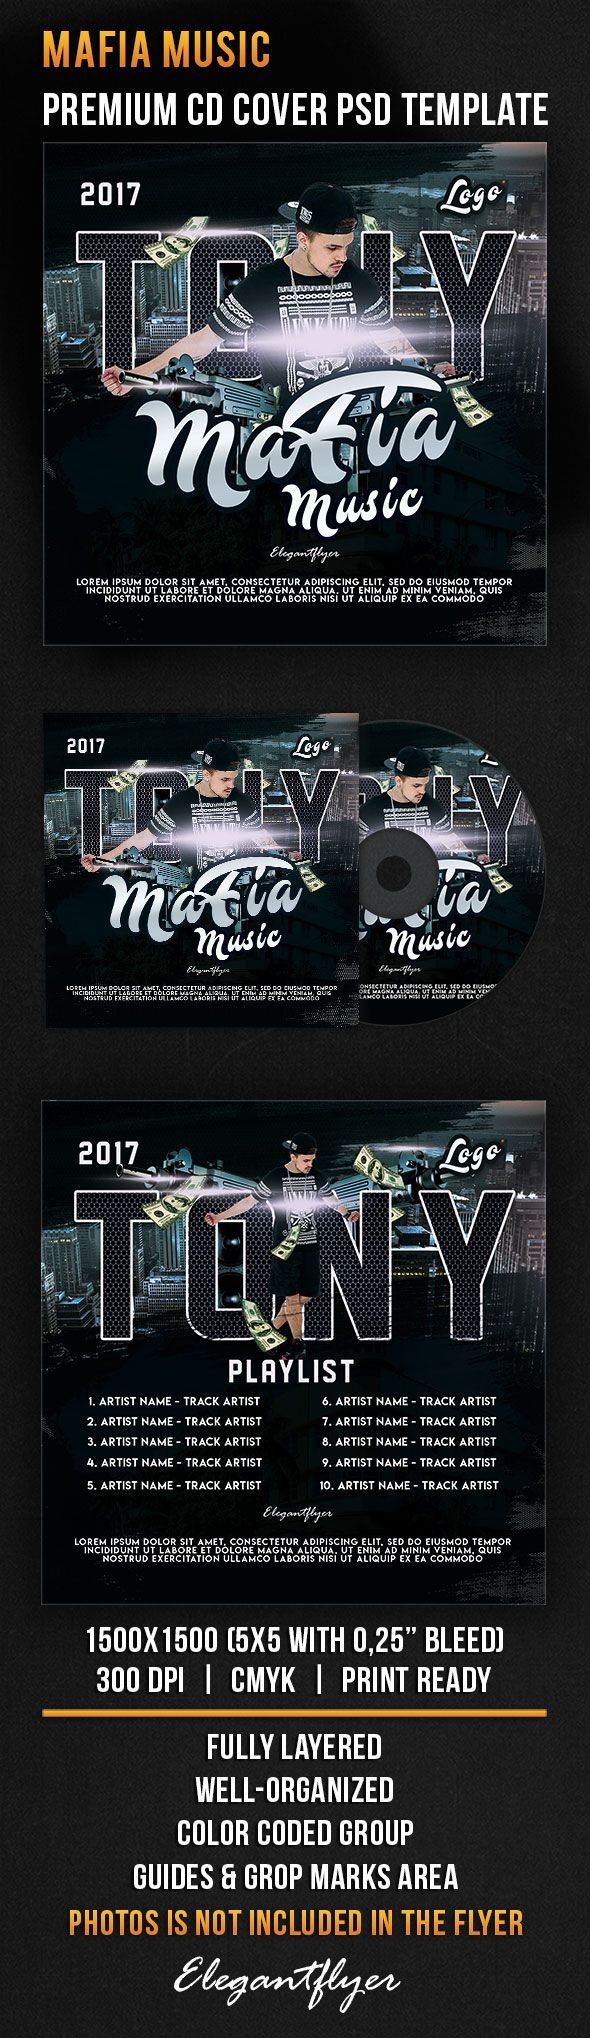 Mafia Musik by ElegantFlyer